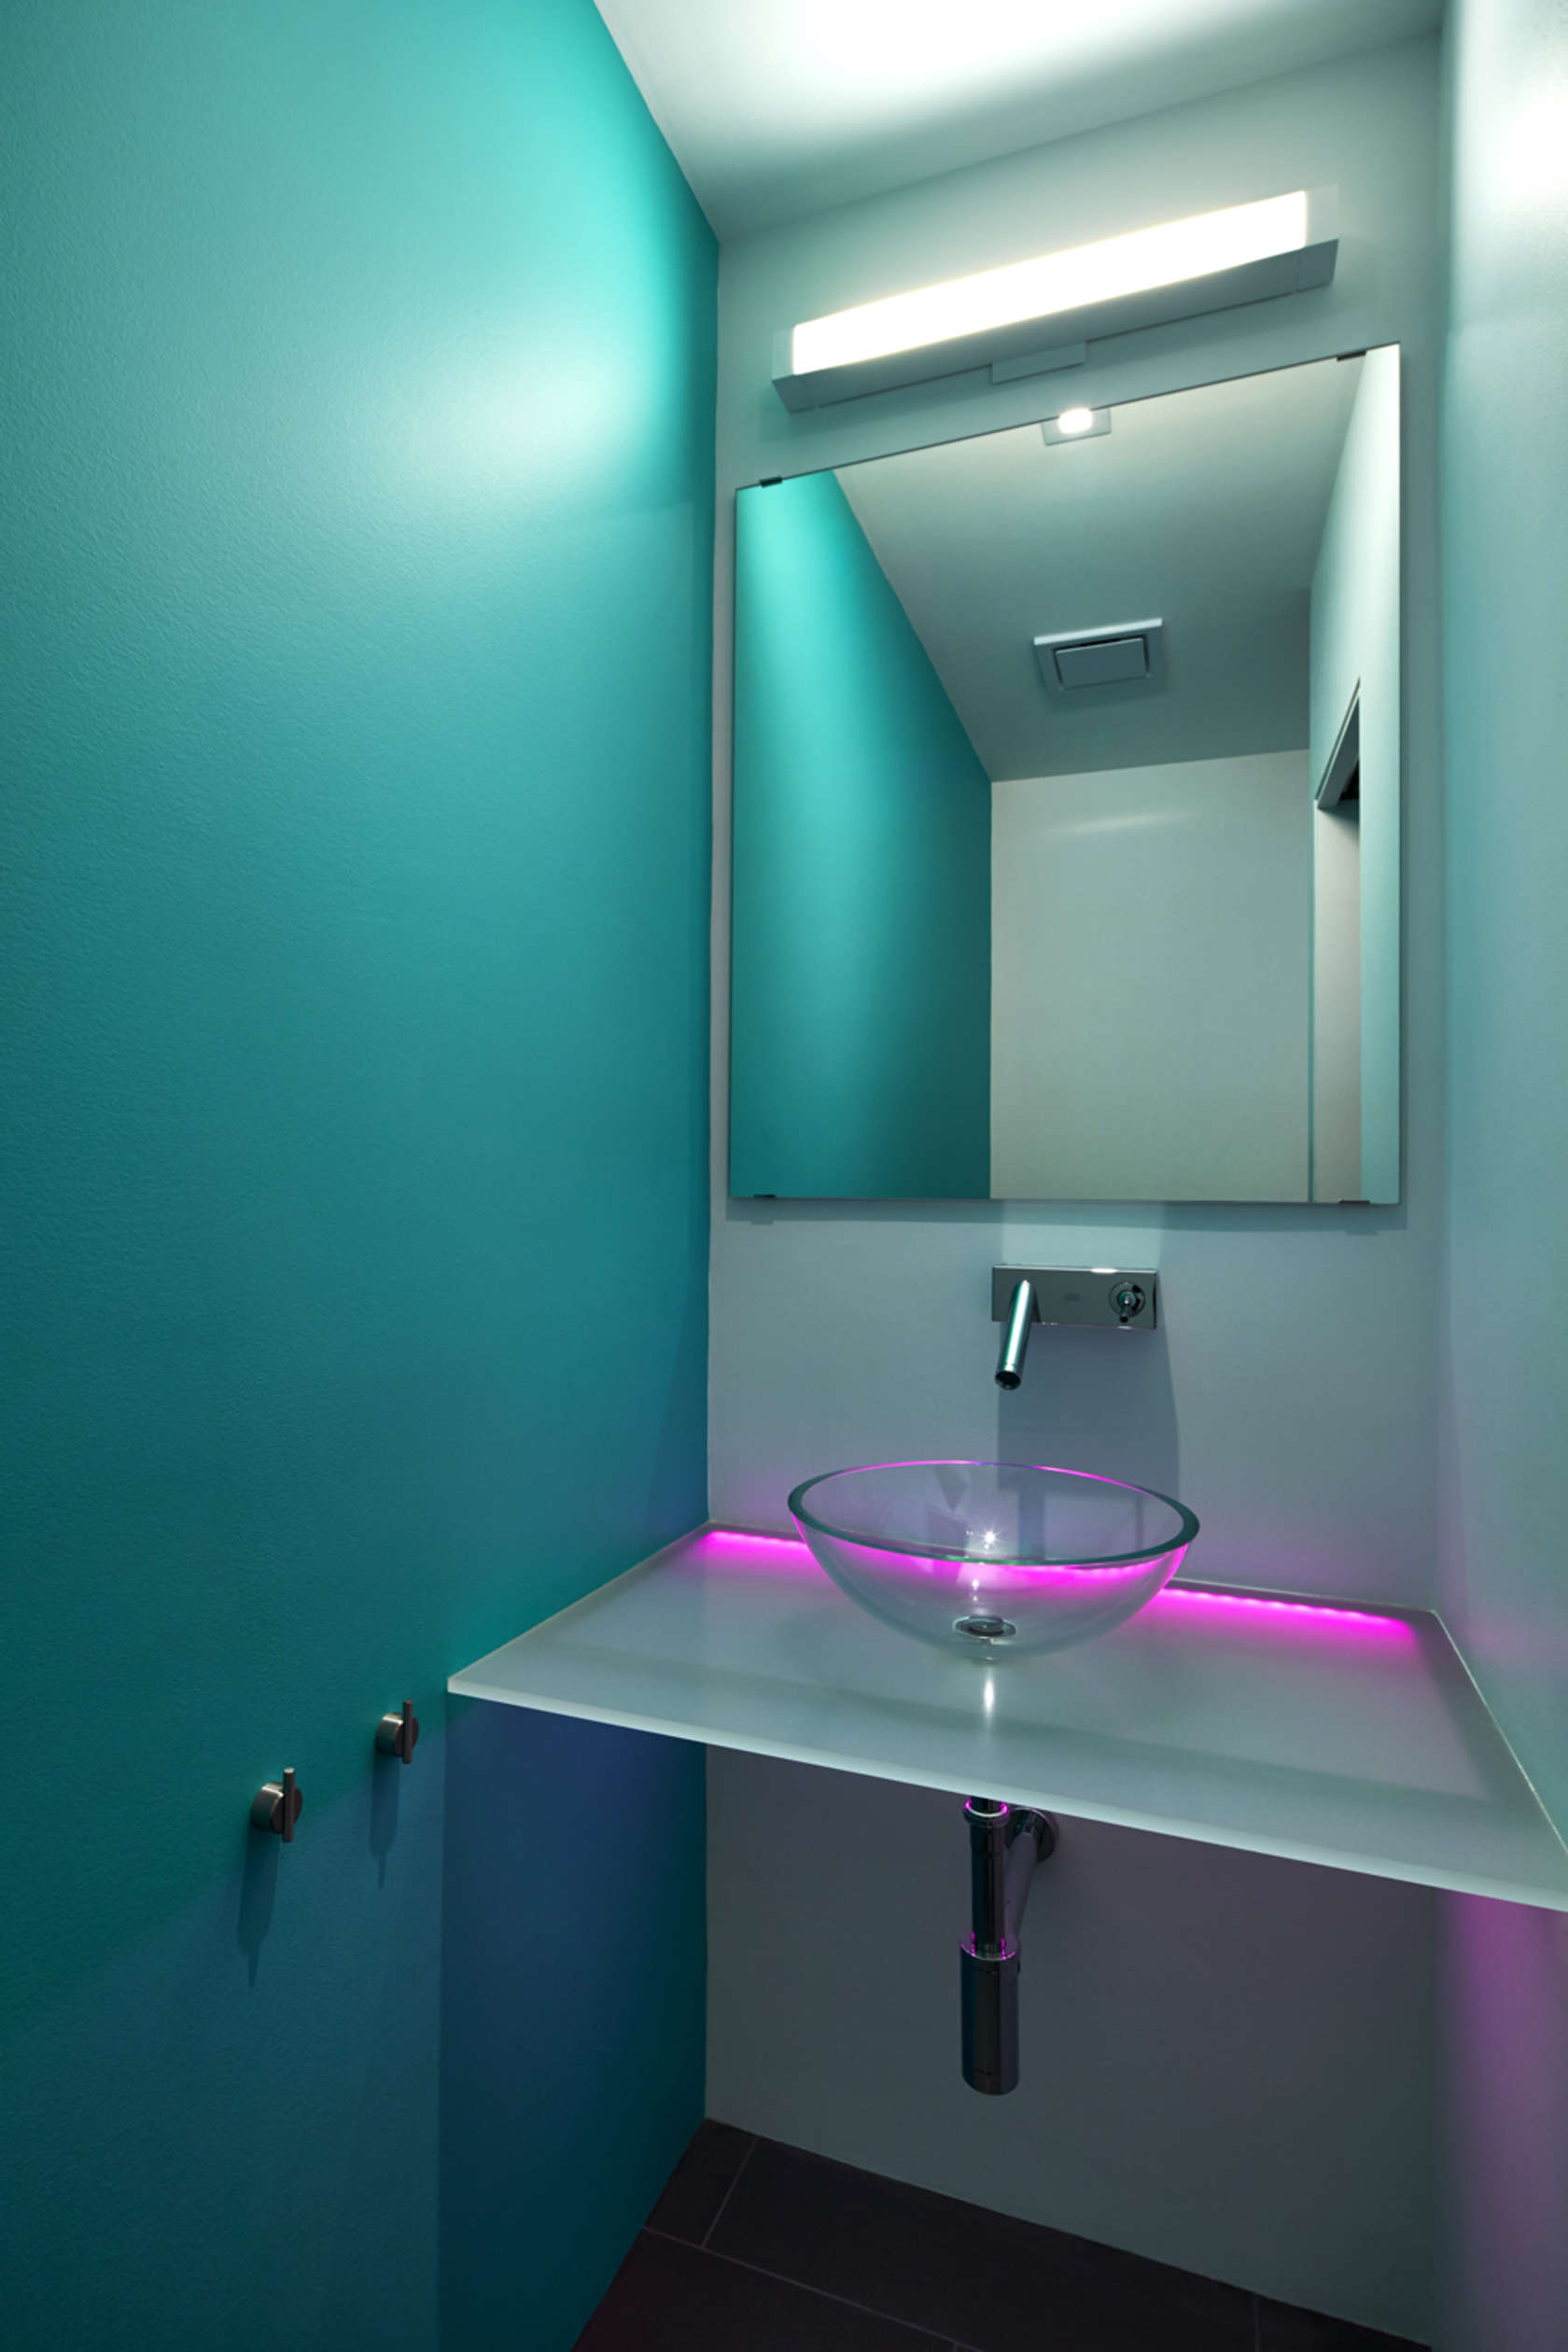 Led Bathroom Lighting like architecture u0026 interior design? follow us.. JCLBDVU